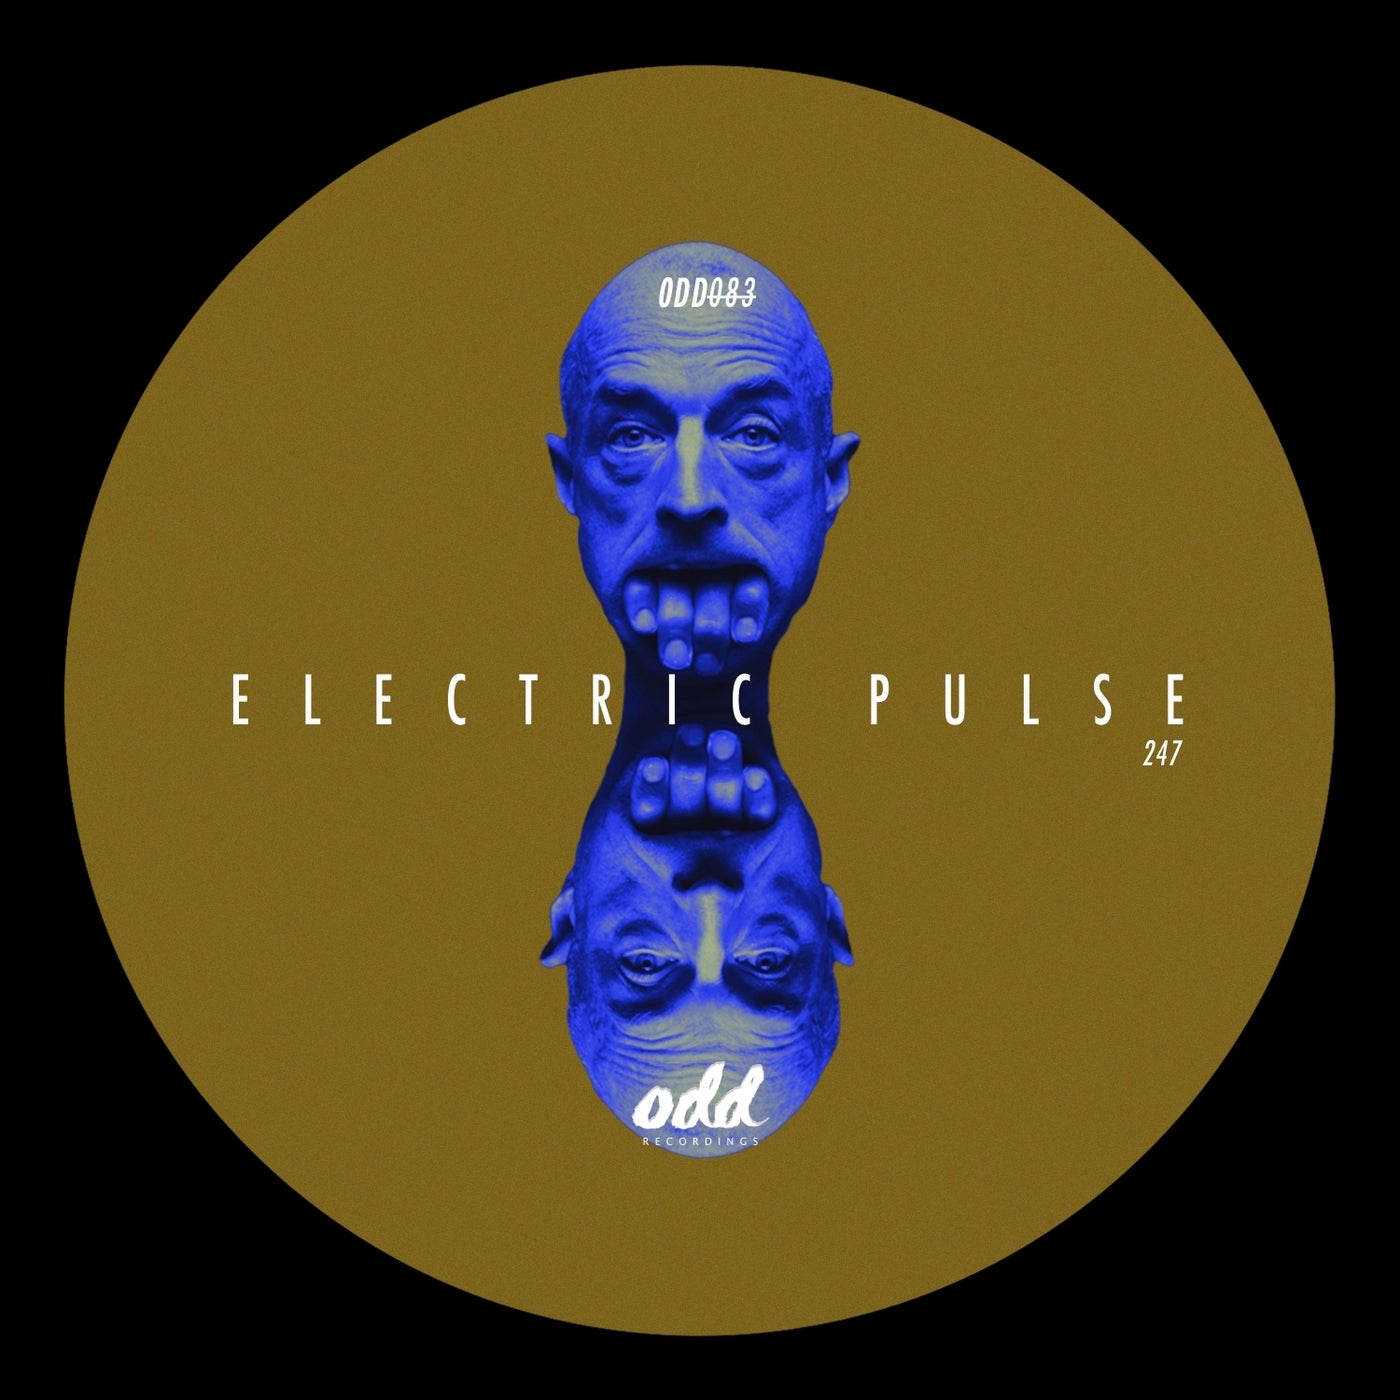 Electric Pulse